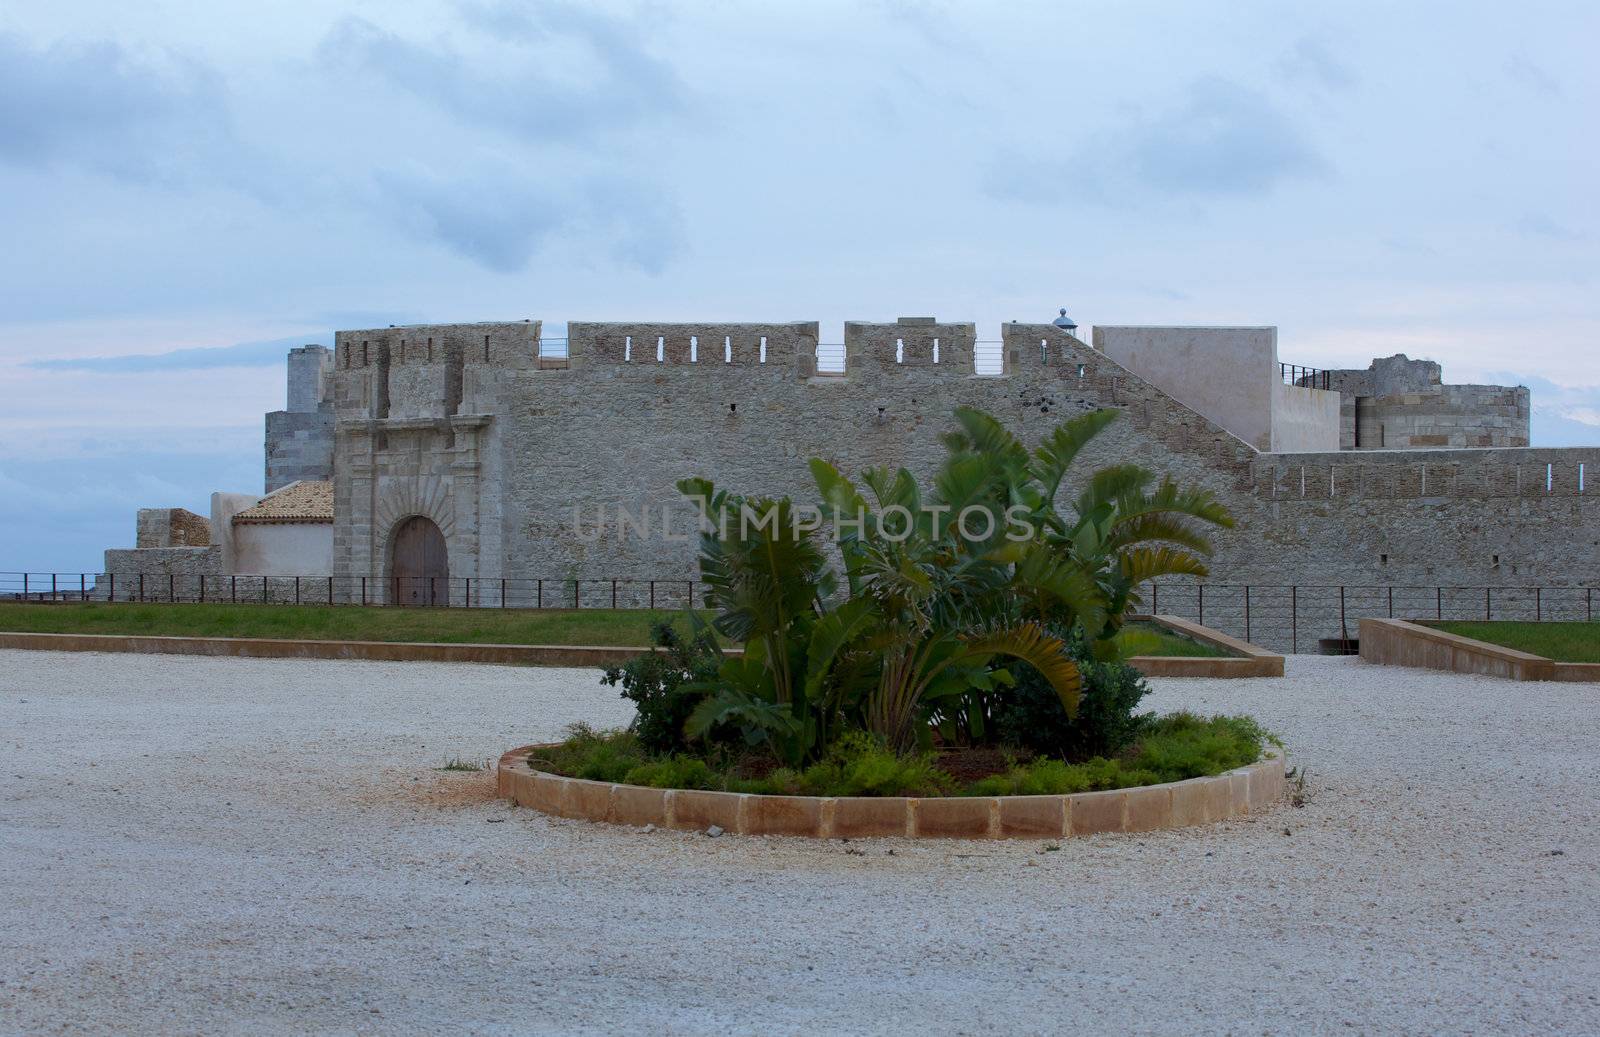 View of Maniace castle, Ortigia - Syracuse